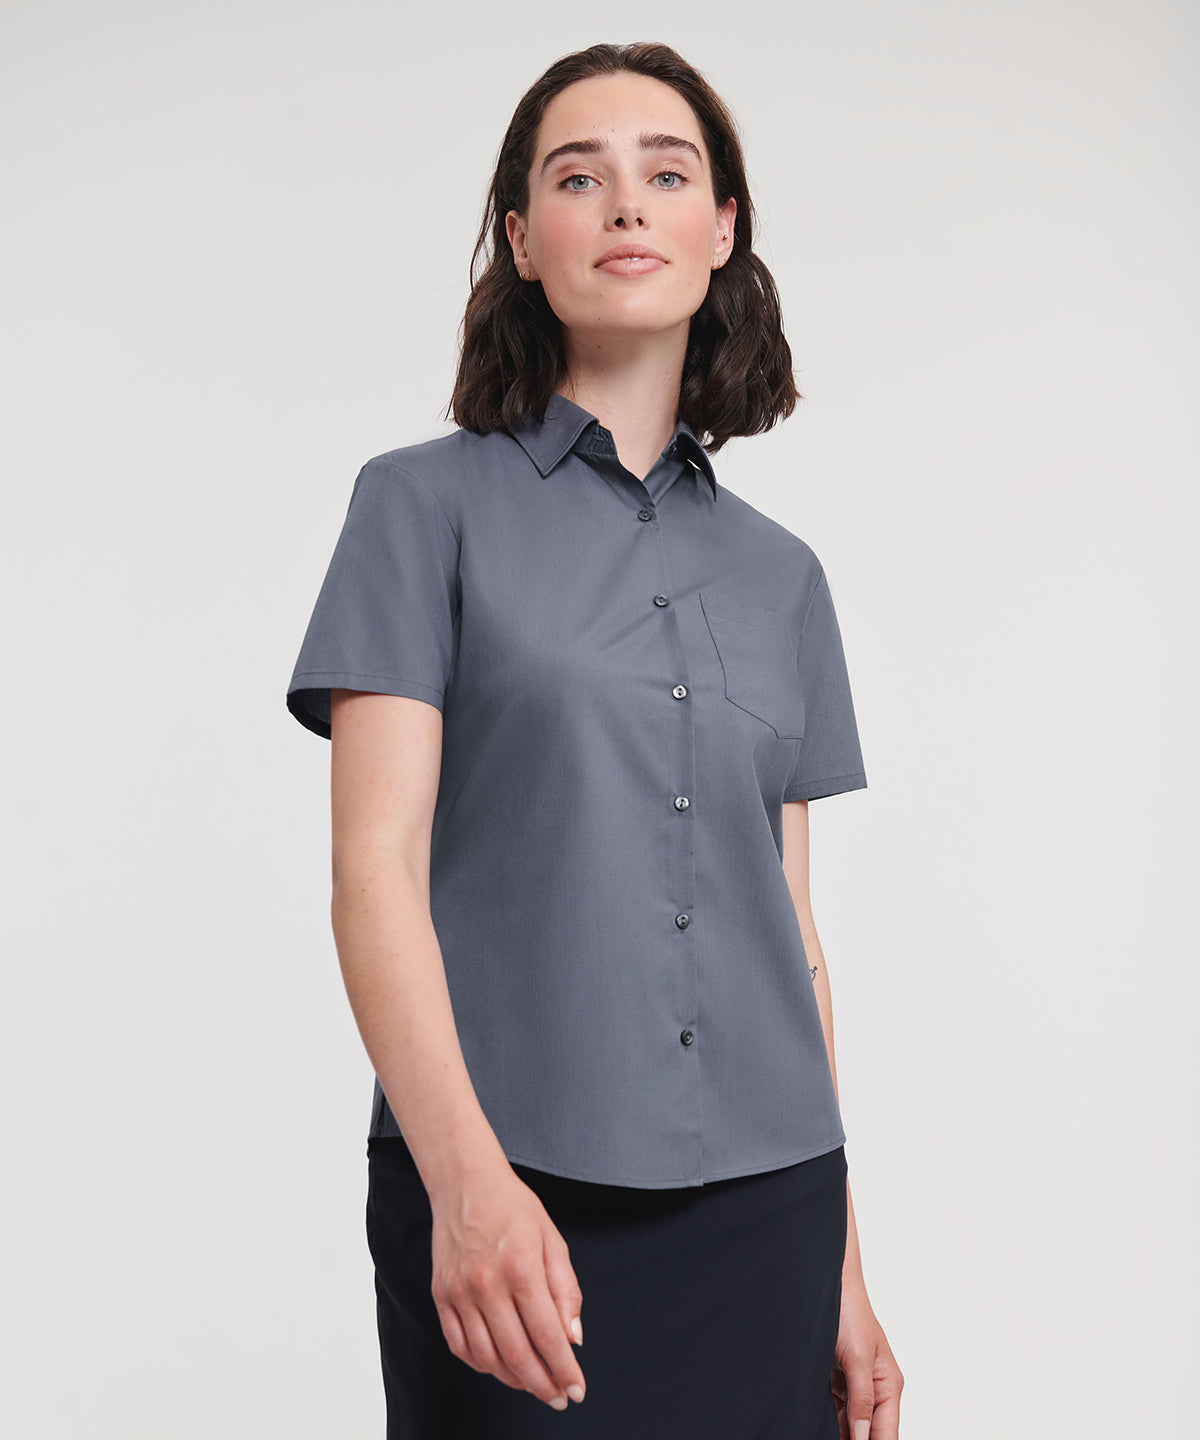 Women's Short Sleeve Polycotton Easycare Poplin Shirt